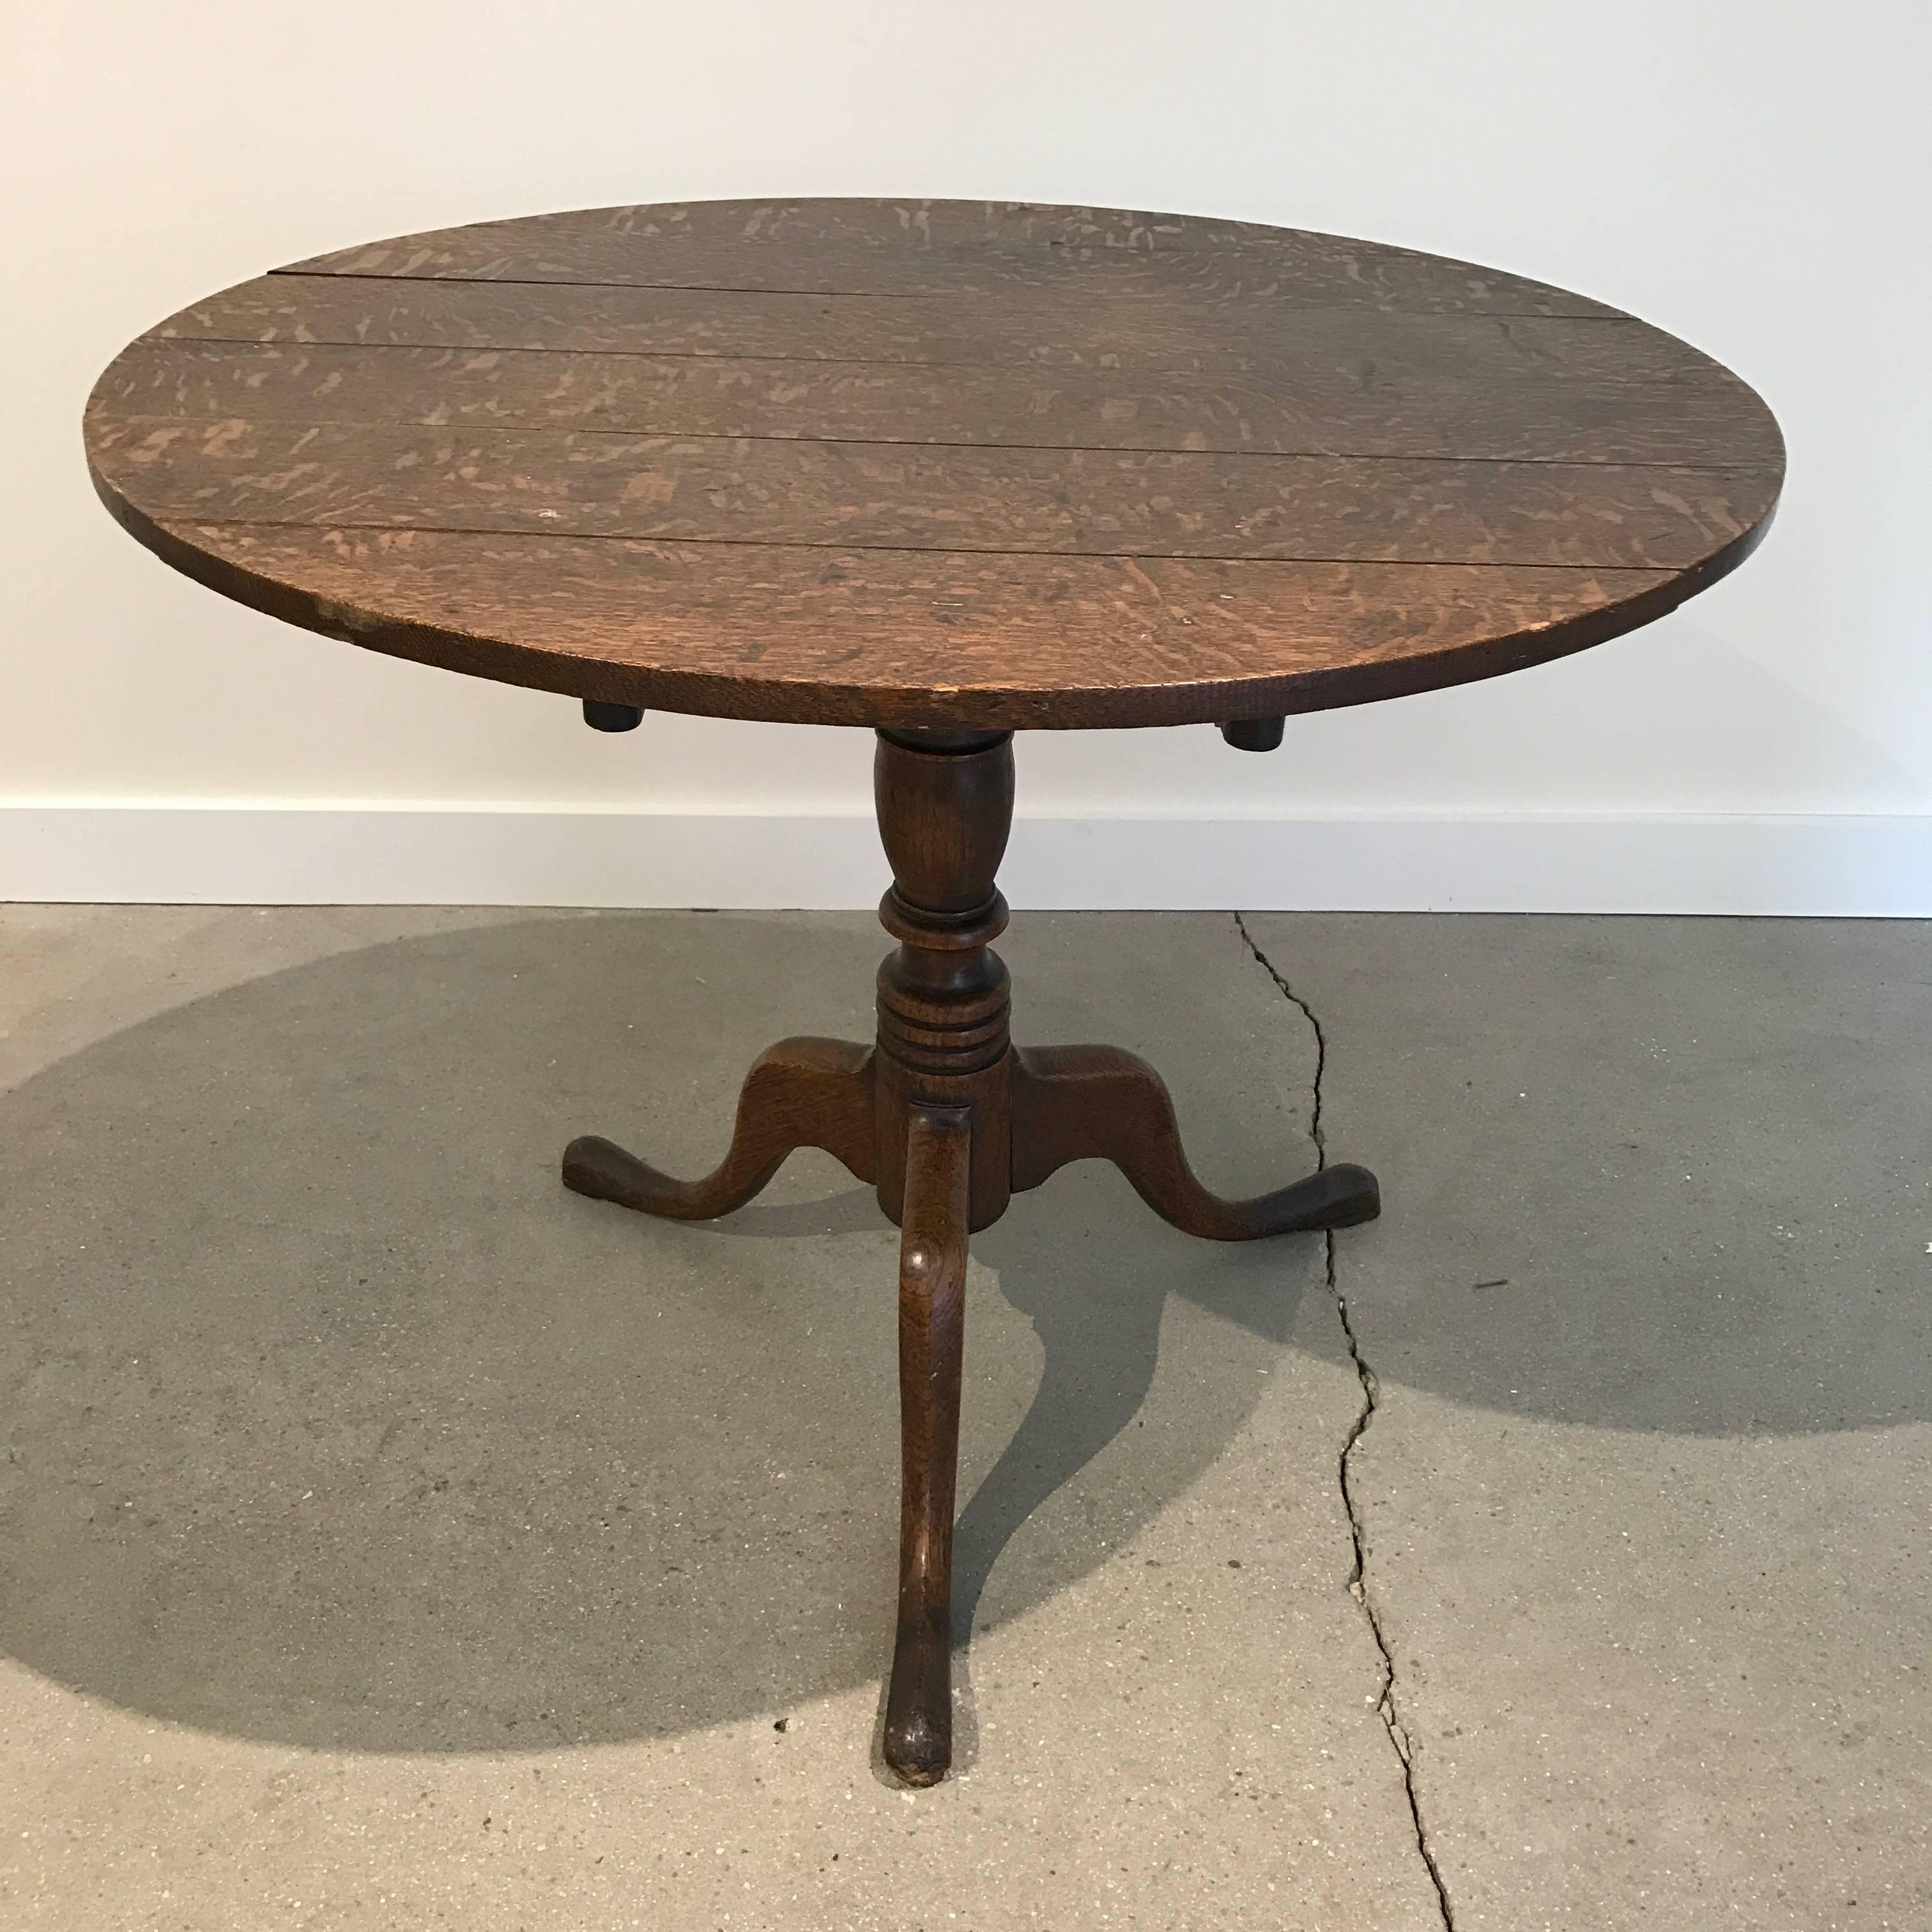 19th century English oak tilt-top table with tripod base.